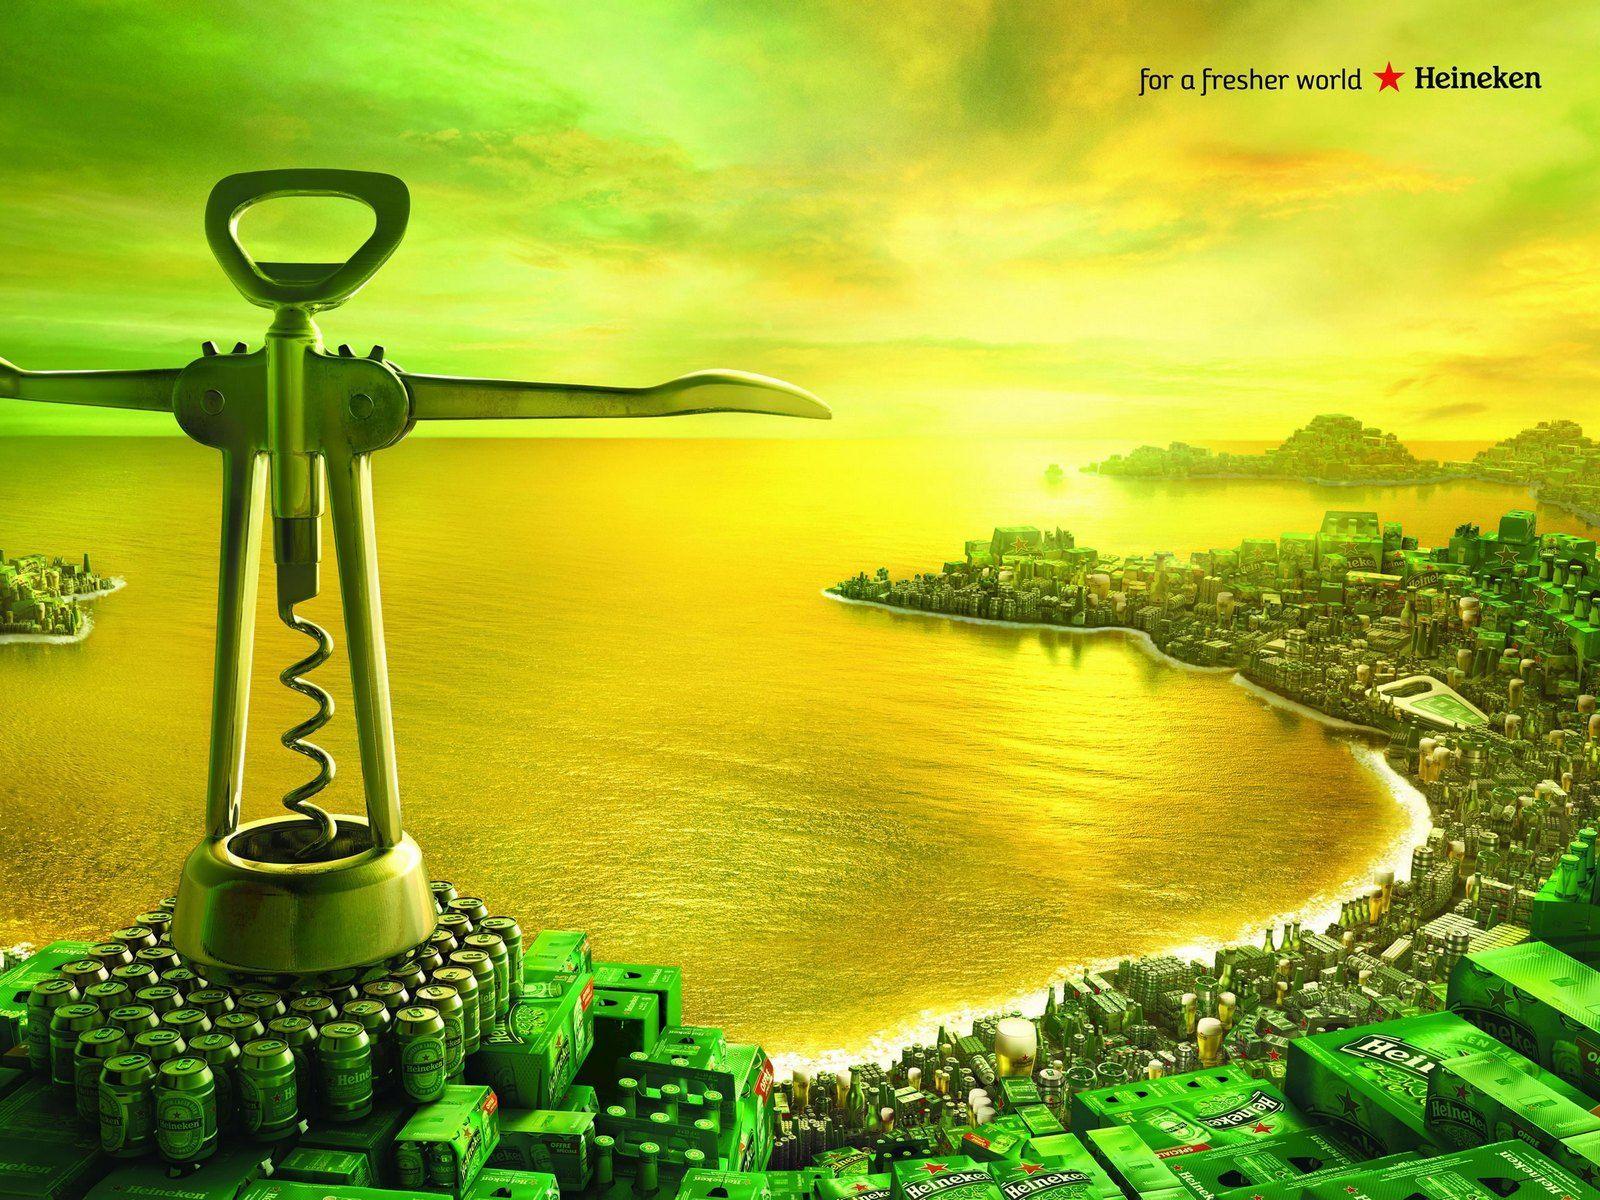 Image: Heineken HD wallpaper 0025: Heineken: Wallpaper